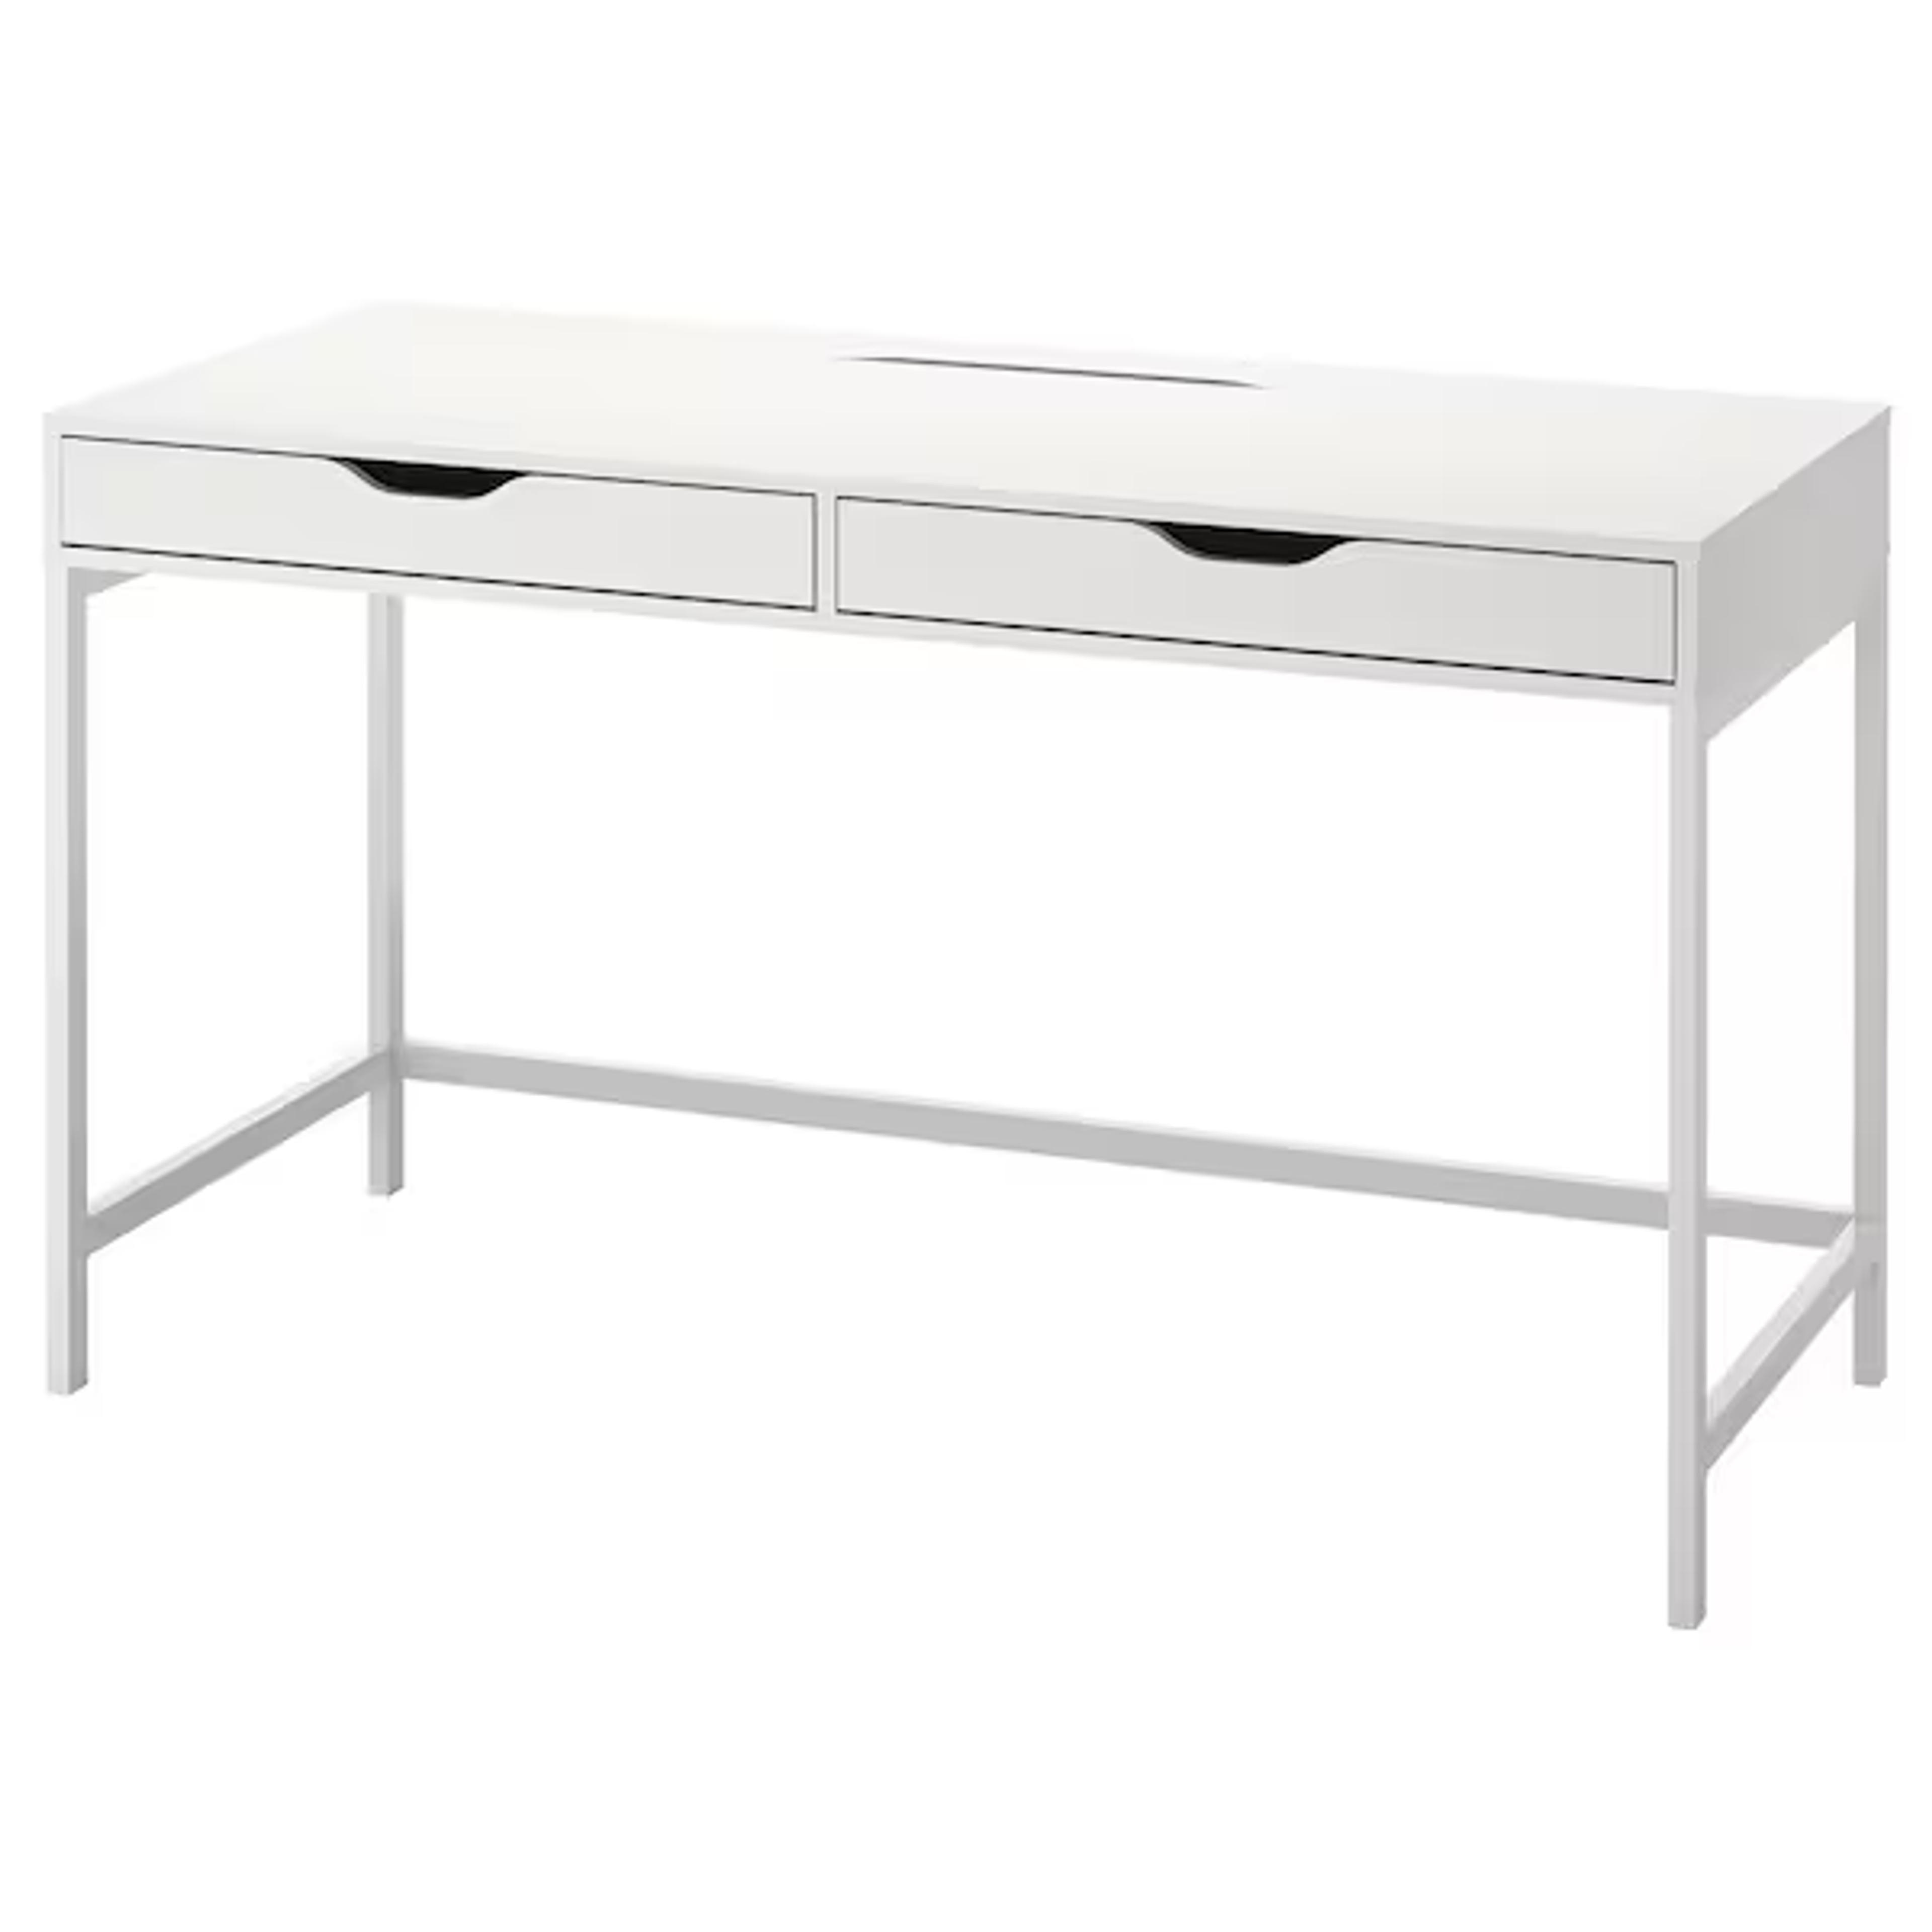 ALEX Desk, white, 52x227/8" - IKEA